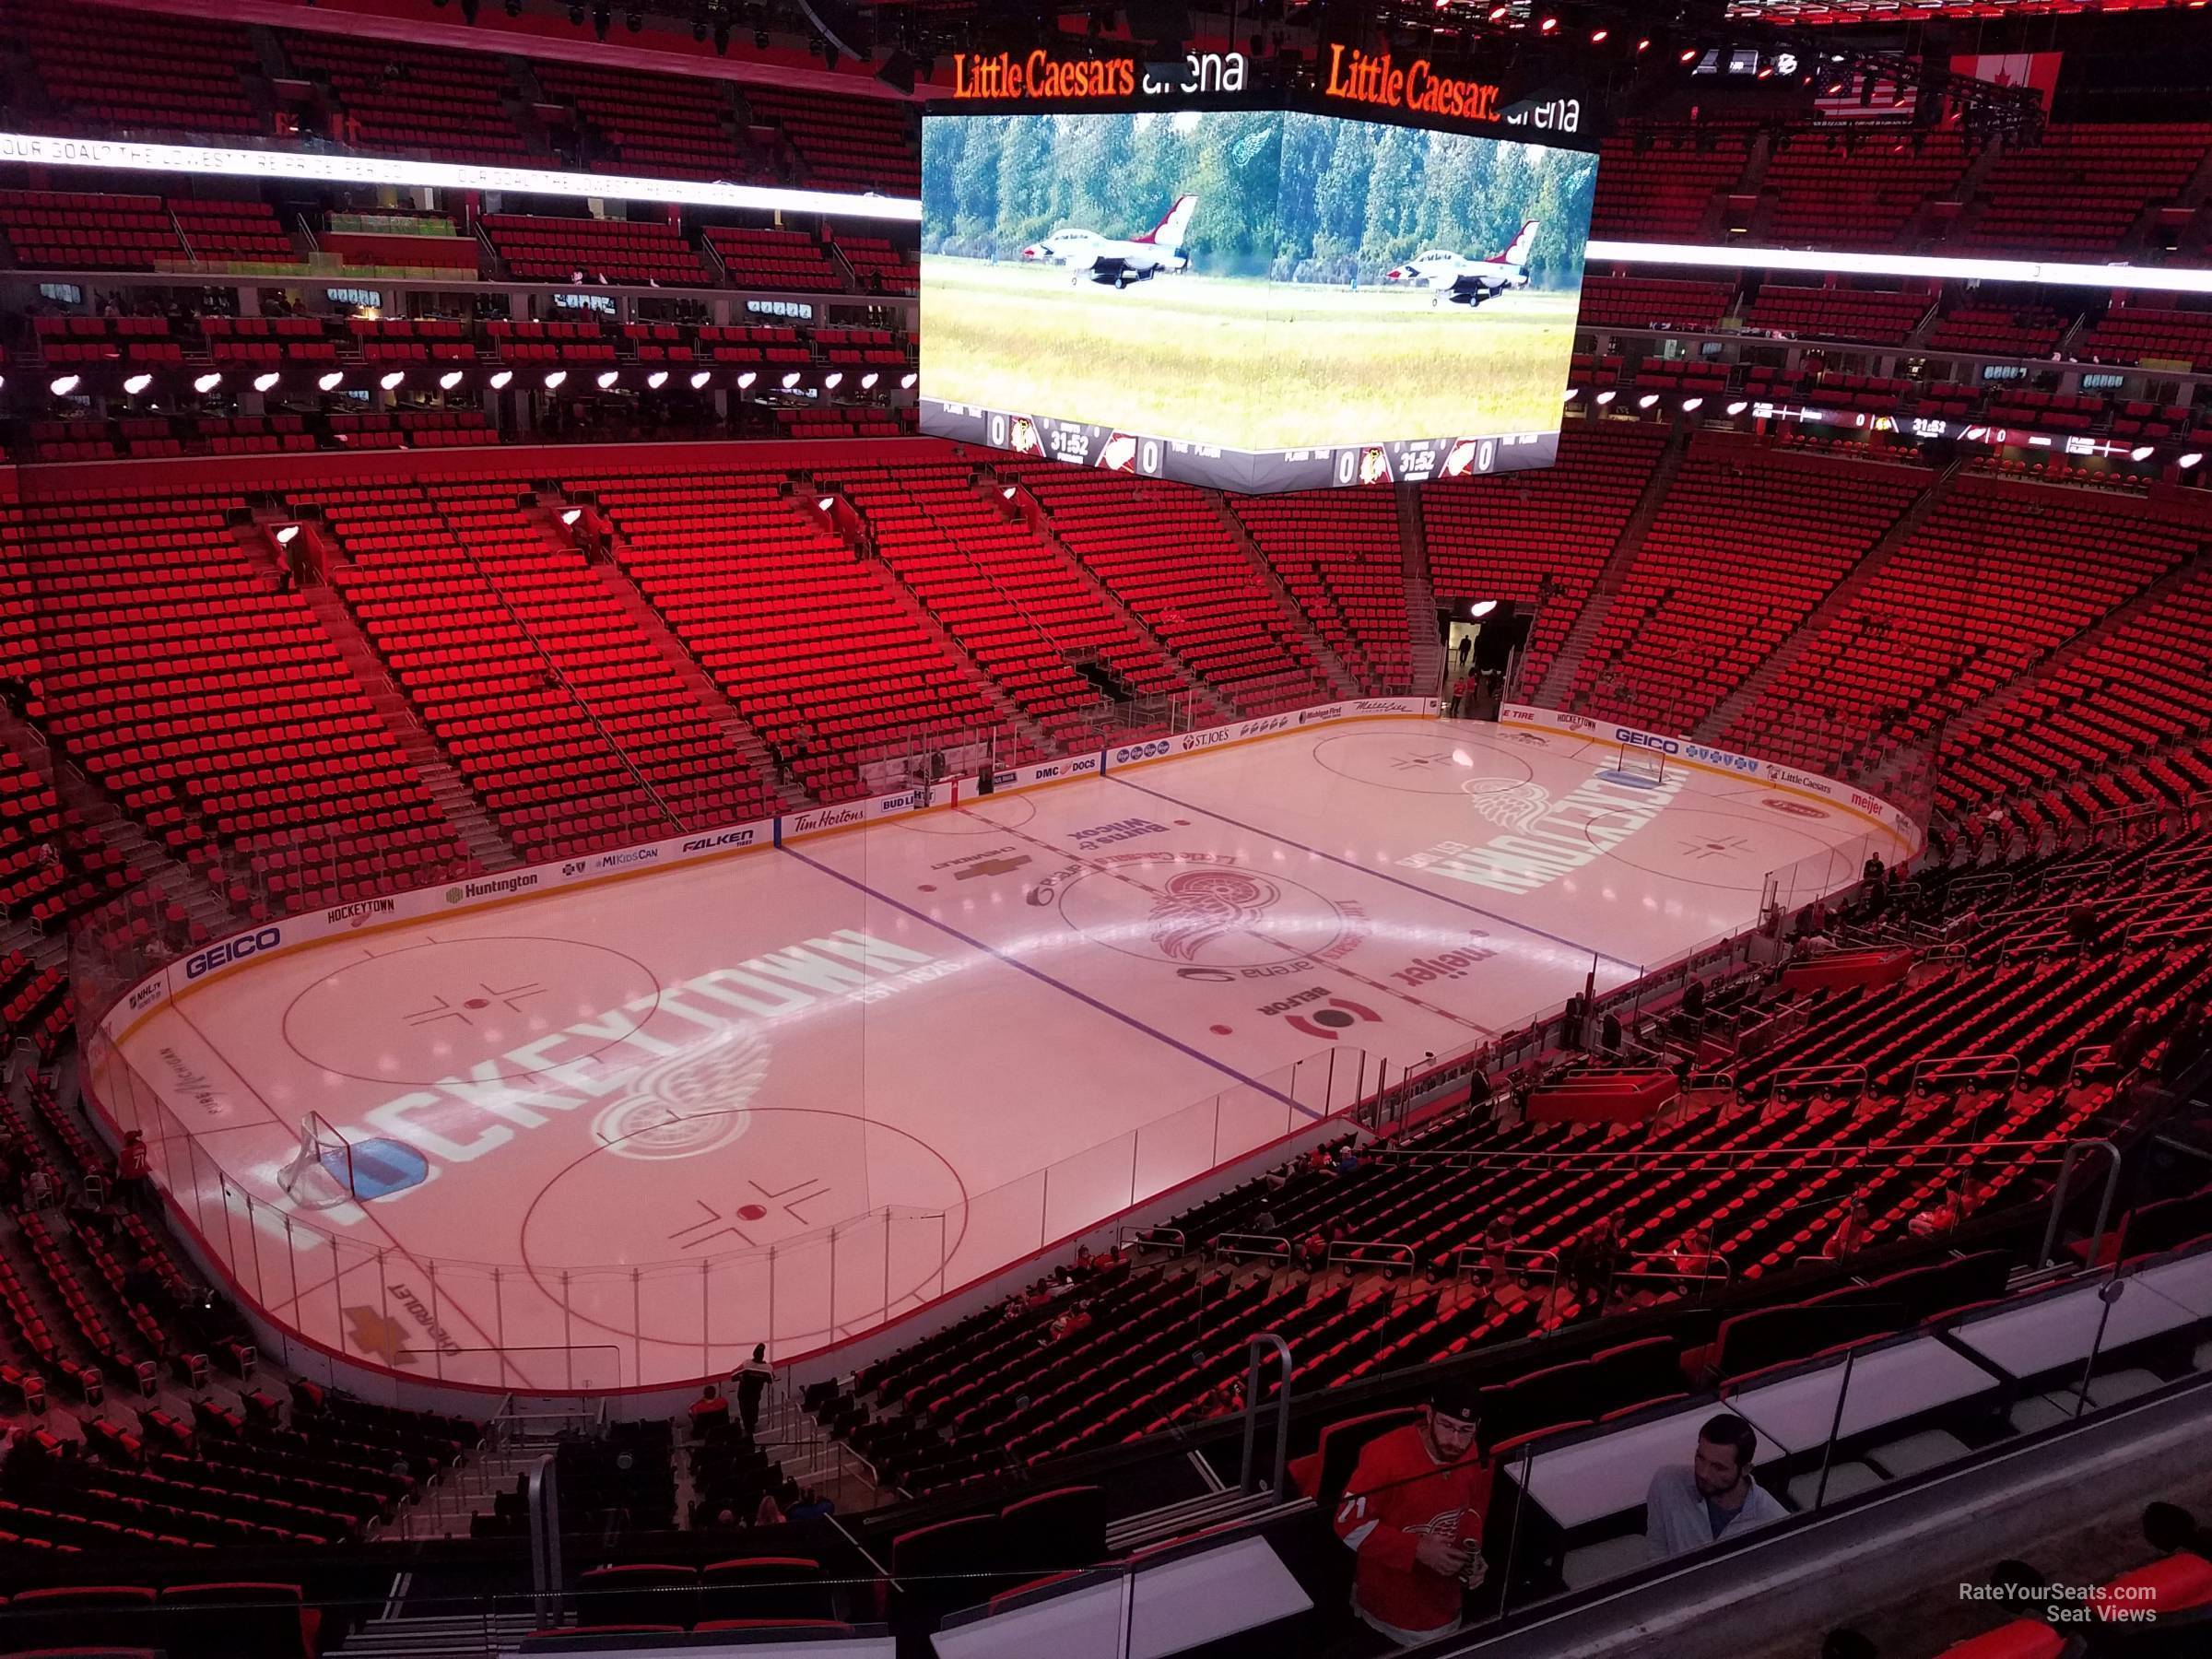 mezzanine 33, row 4 seat view  for hockey - little caesars arena